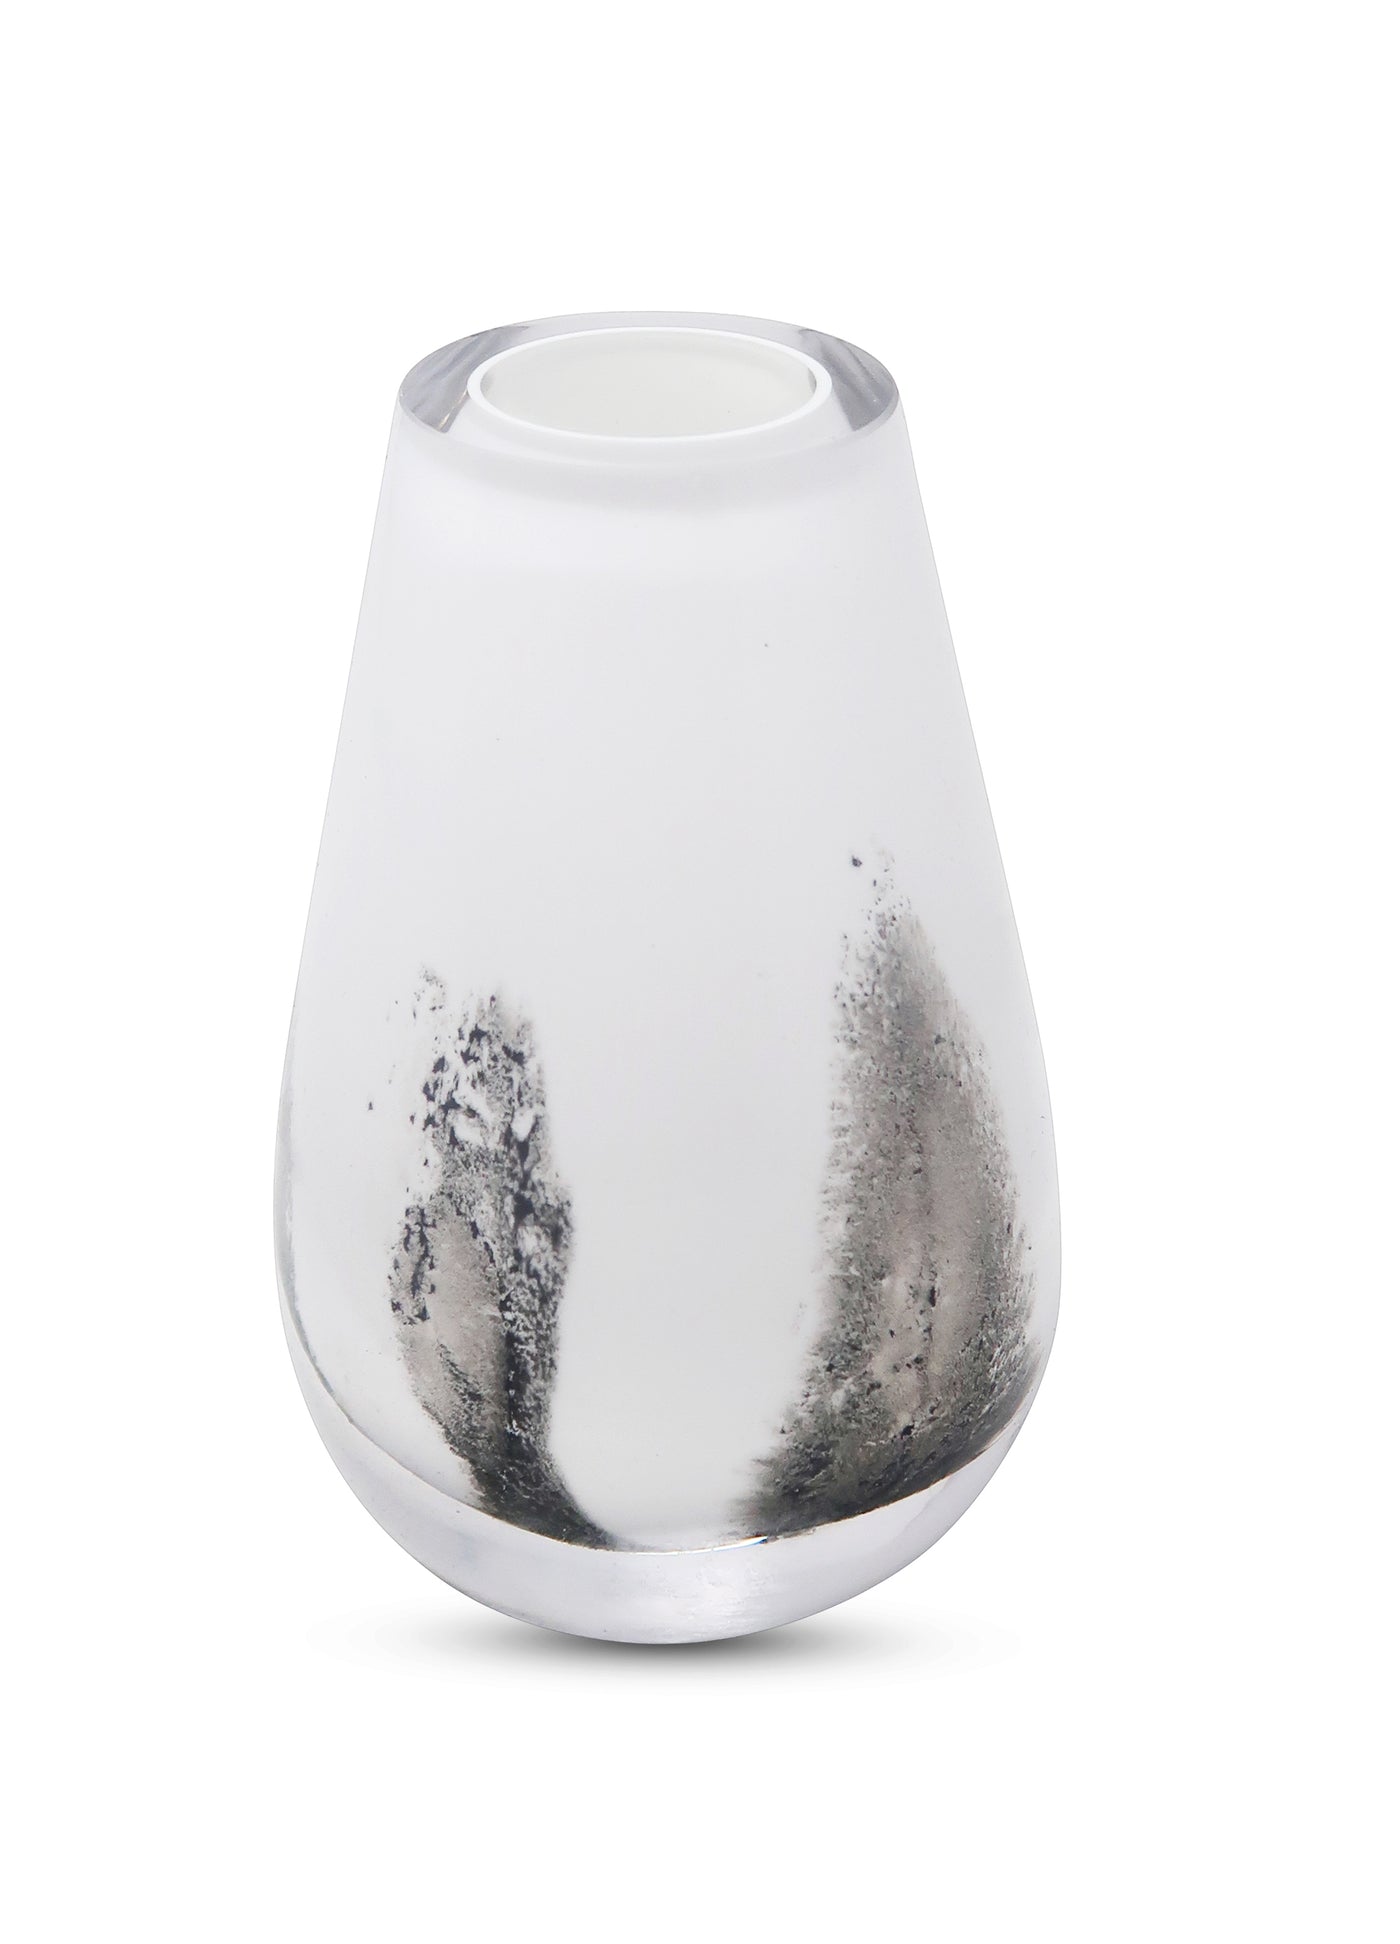 Glass Bud Vase, 6.5"H